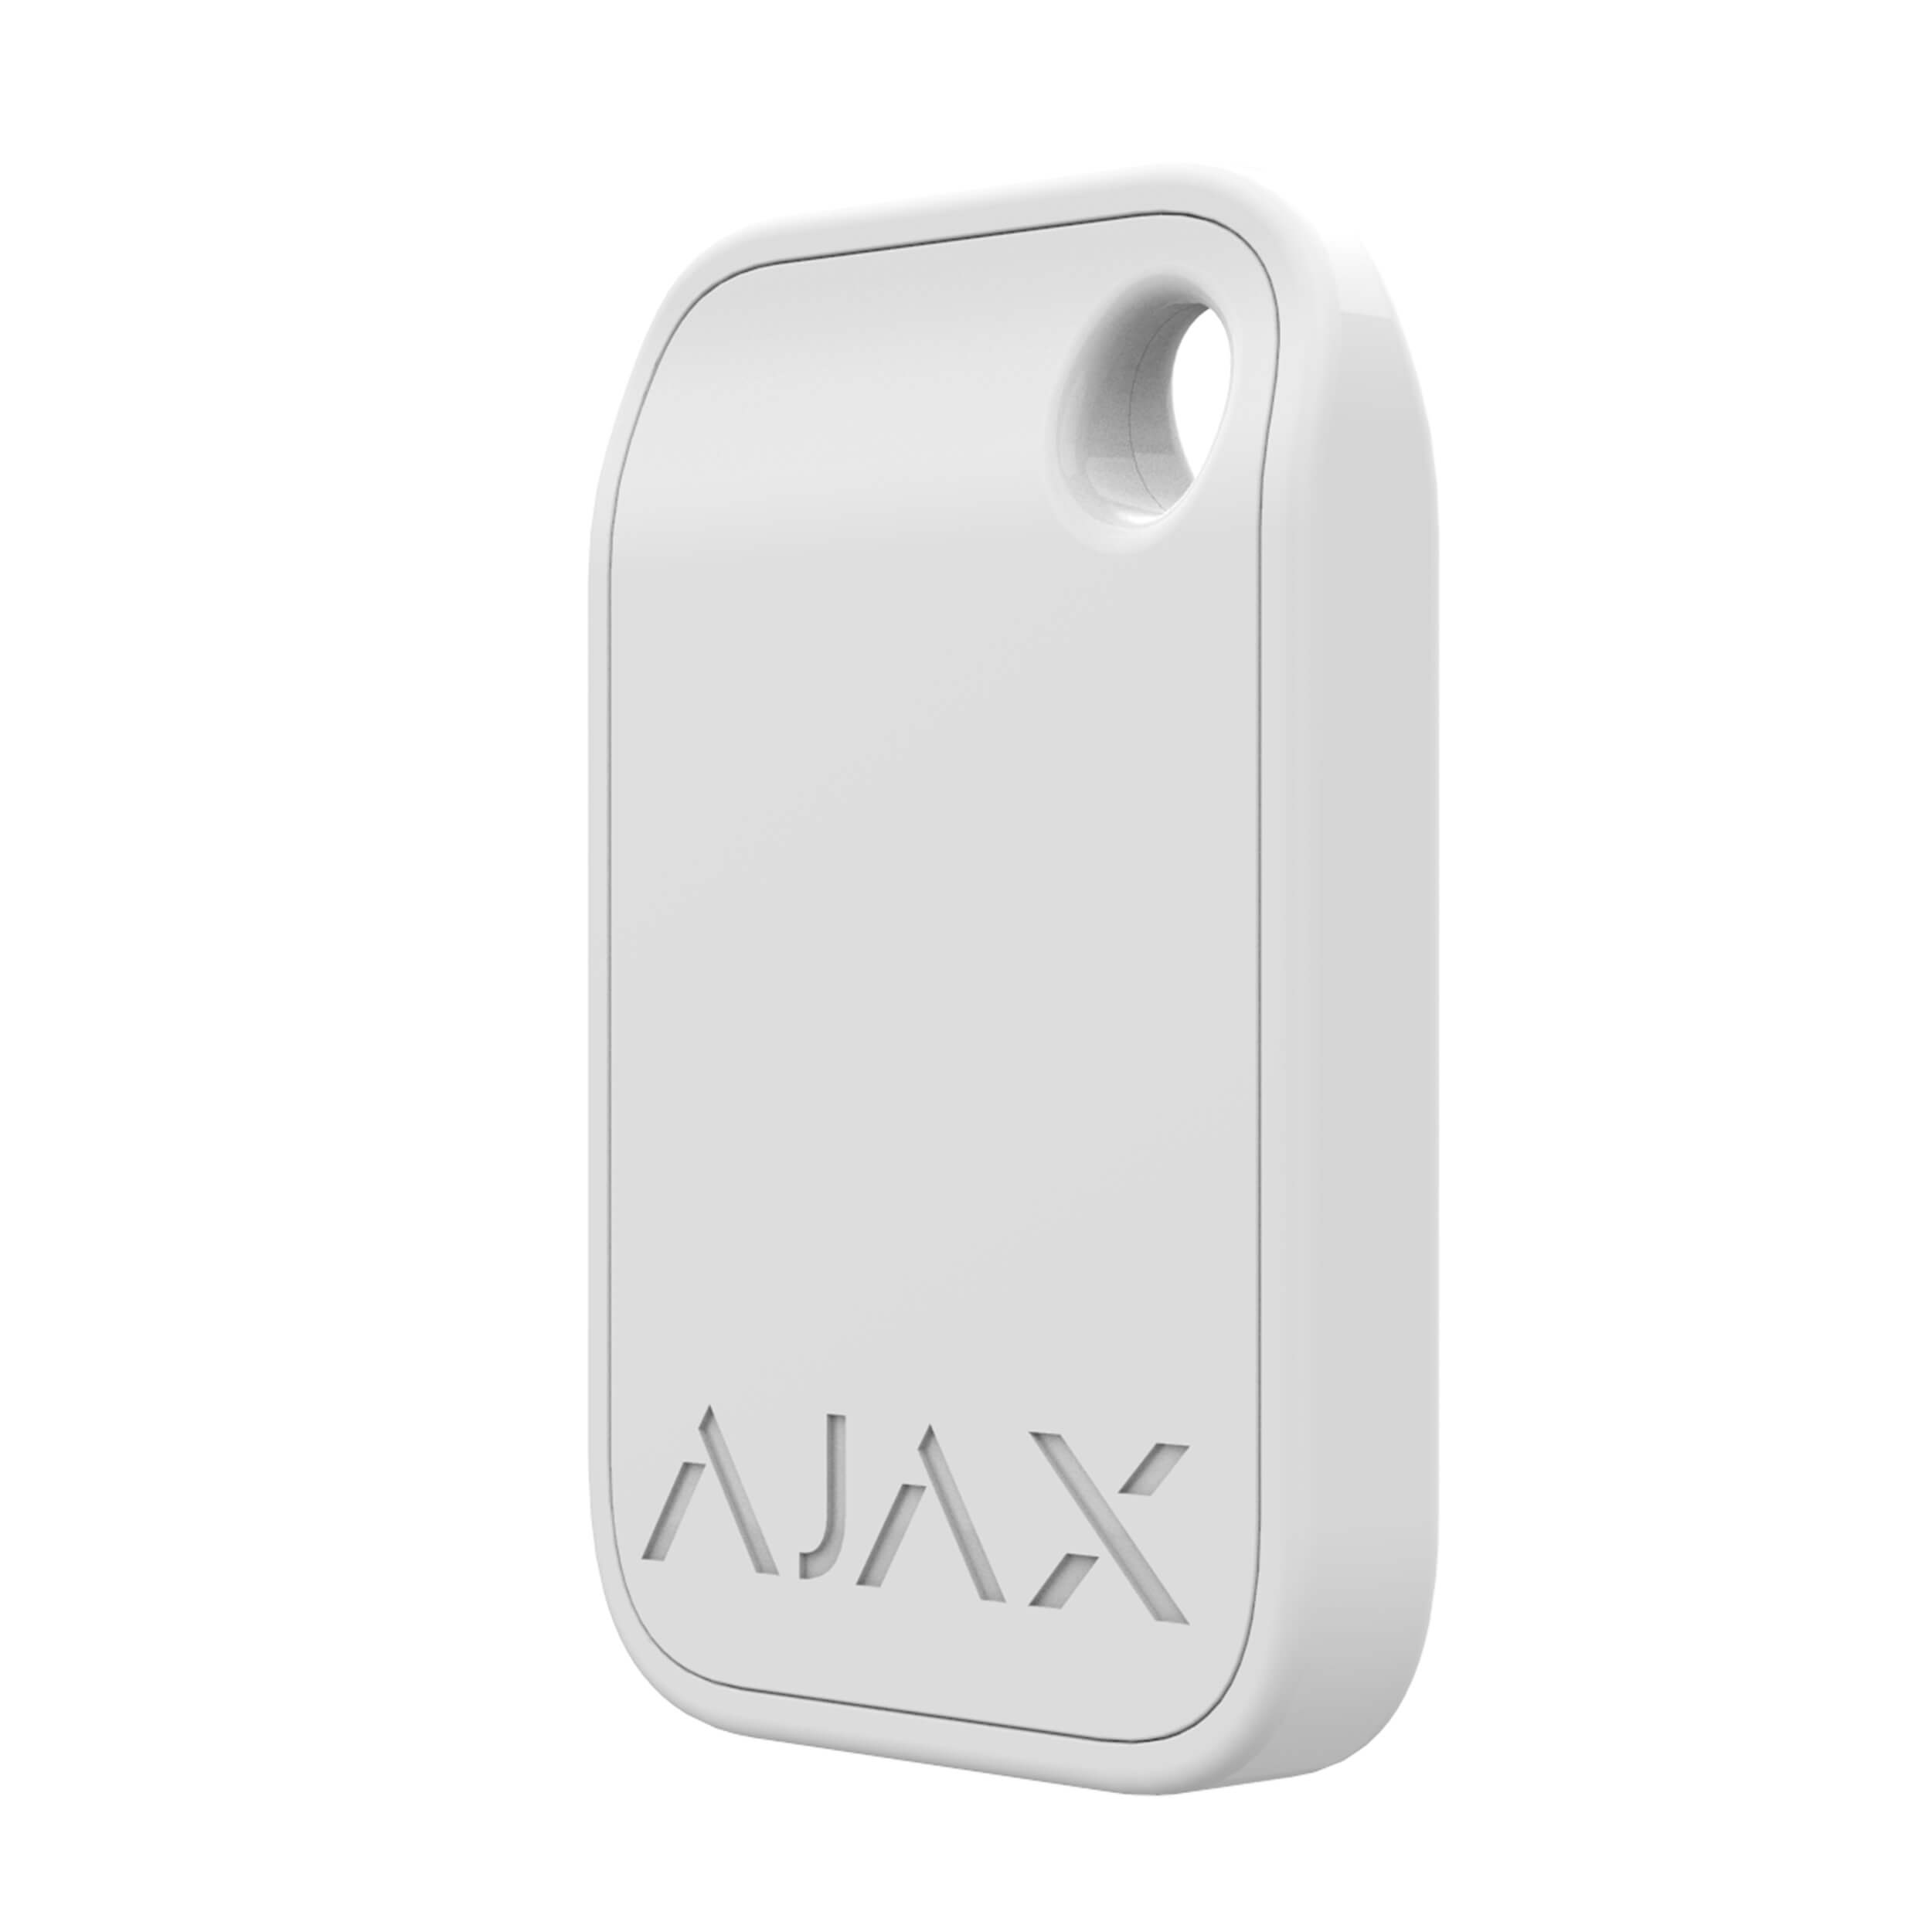 AJAX | Kontaktloser Schlüsselanhänger | Verschlüsselt | KeyPad Plus | 1-Weiß | Tag